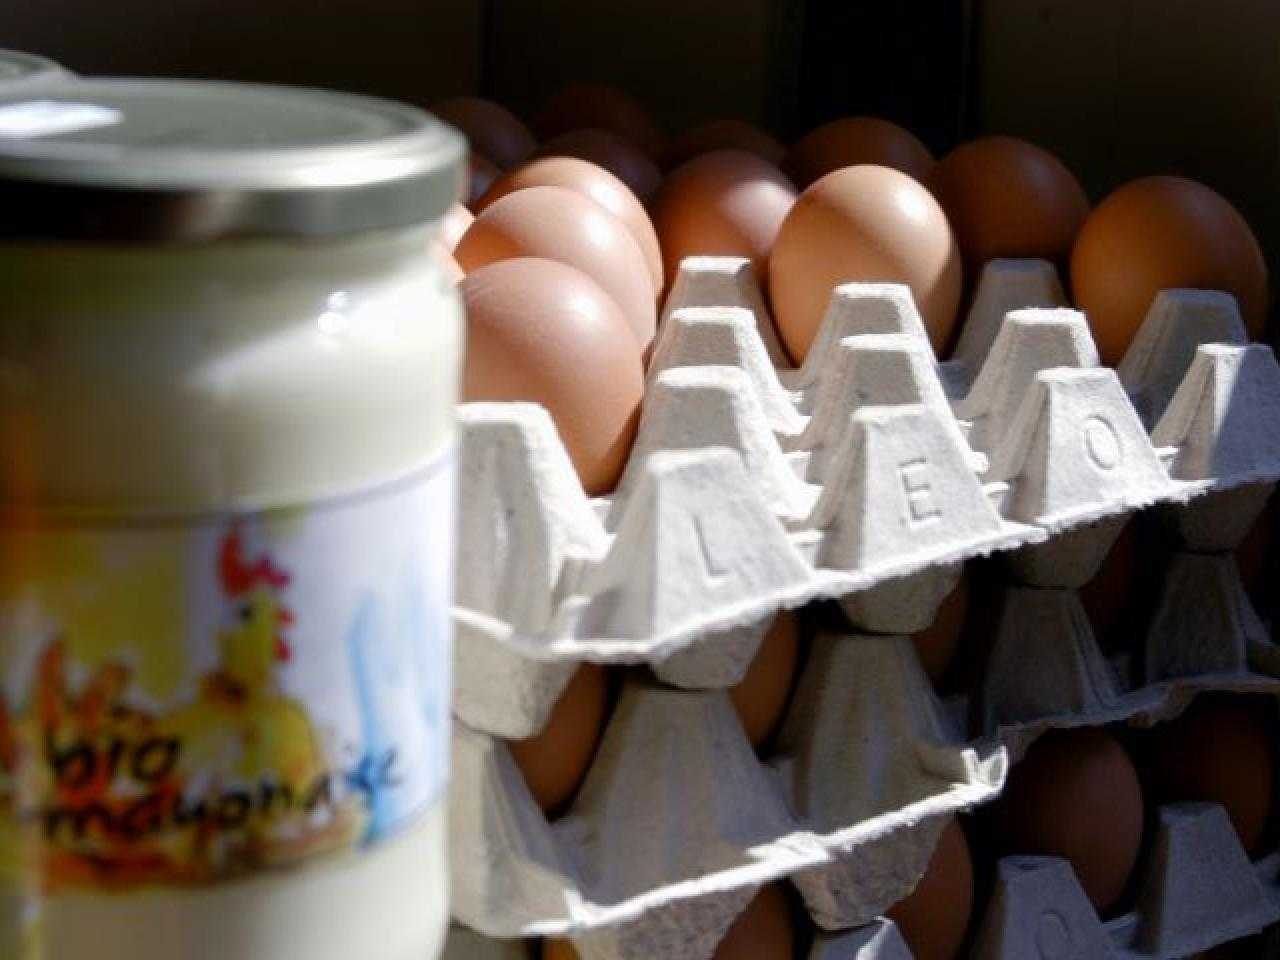 Eggs and mayonnaise